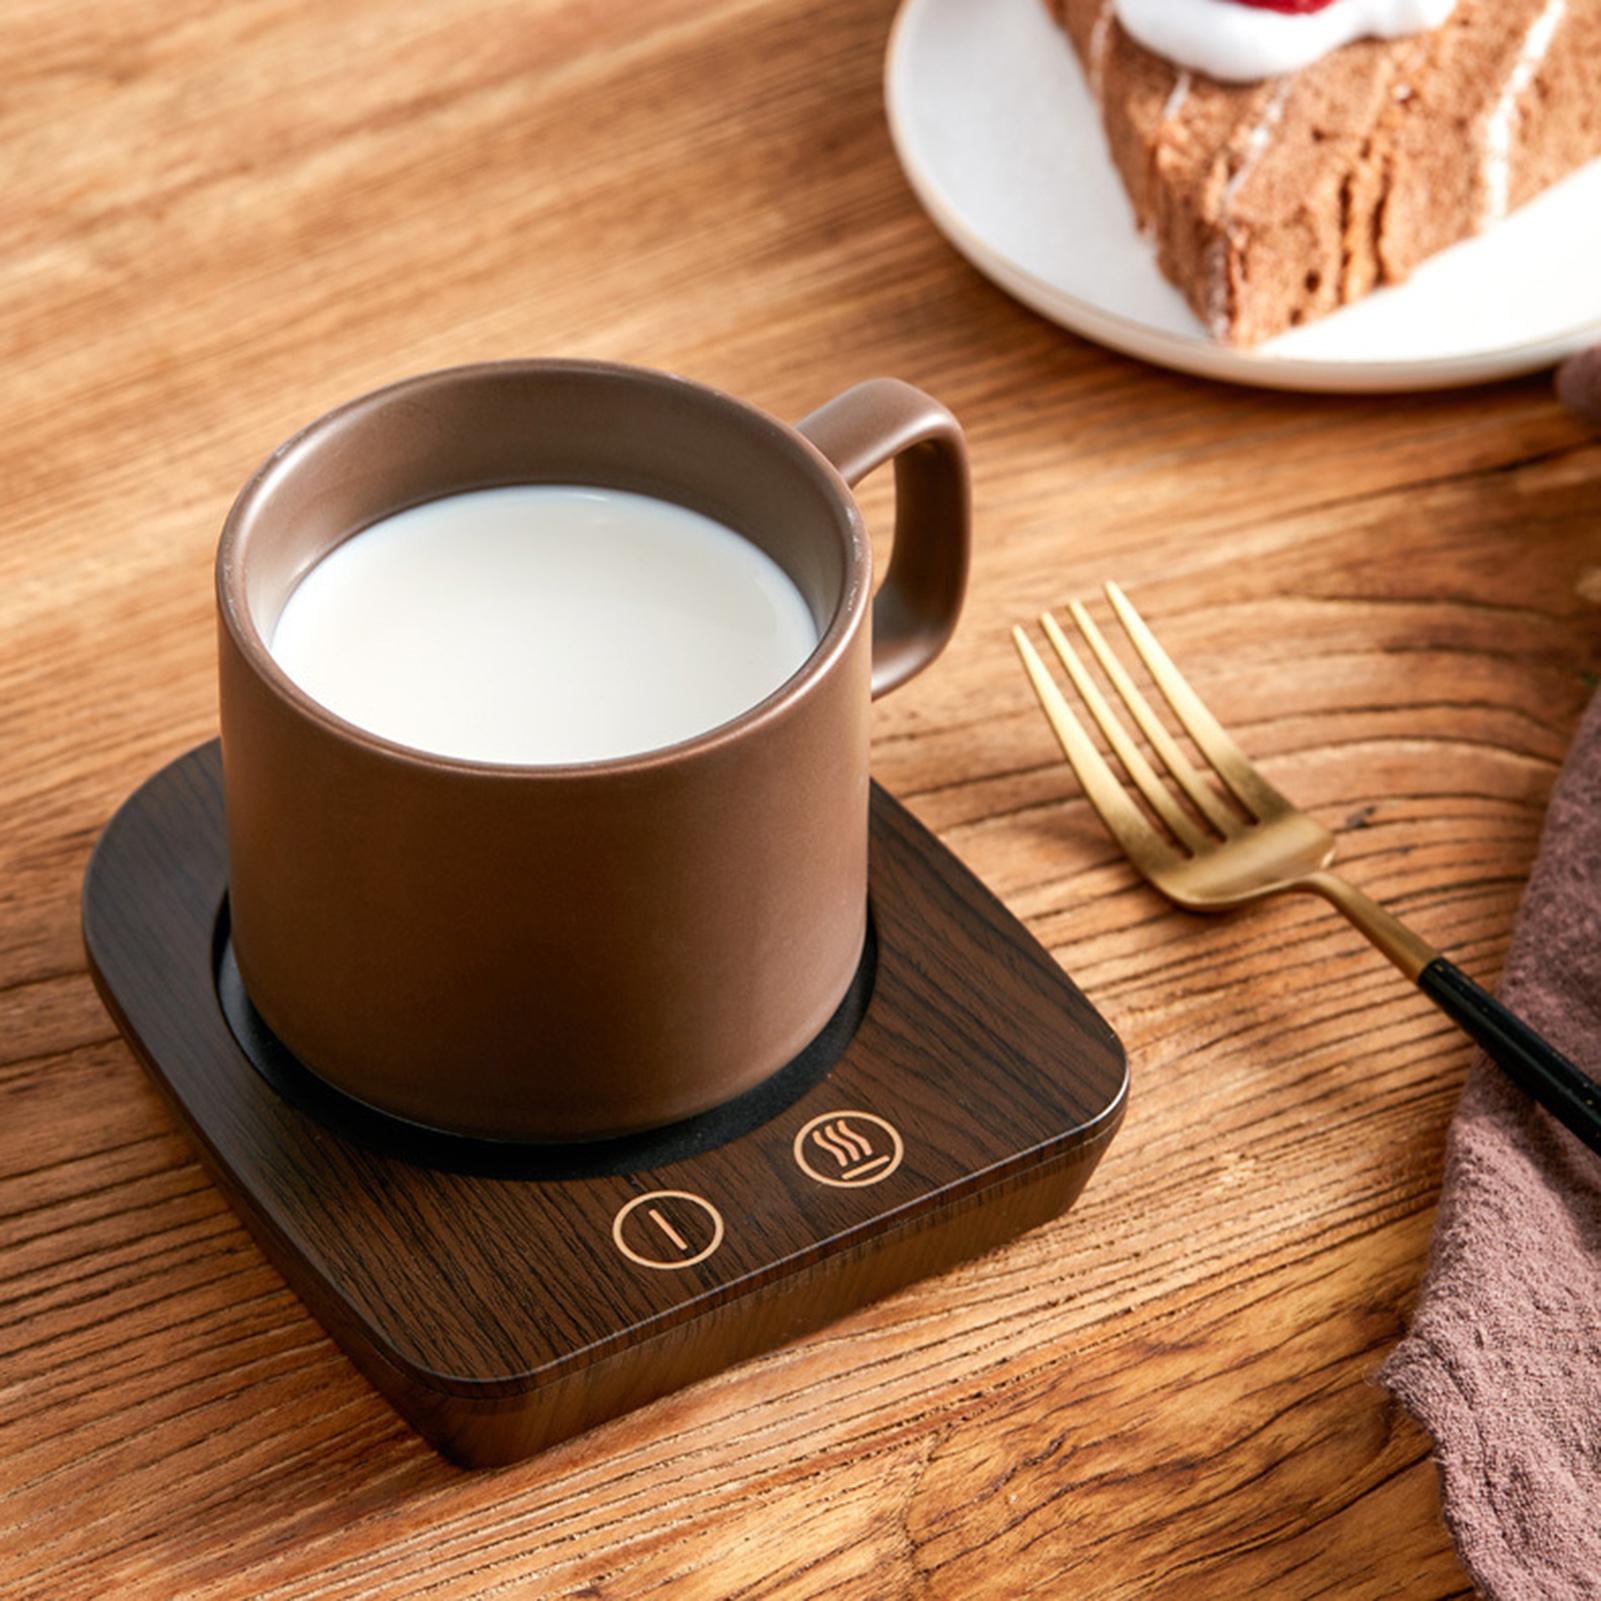 3-in-1 Auto Shut Off Electric Beverage Mug Warmer Plate Milk Constant Temperature 131℉/55℃ for Office/Home to Warm Tea Coffee Mug Warmer QI Wireless Charger & Coffee Mug Warmer & Mirror 